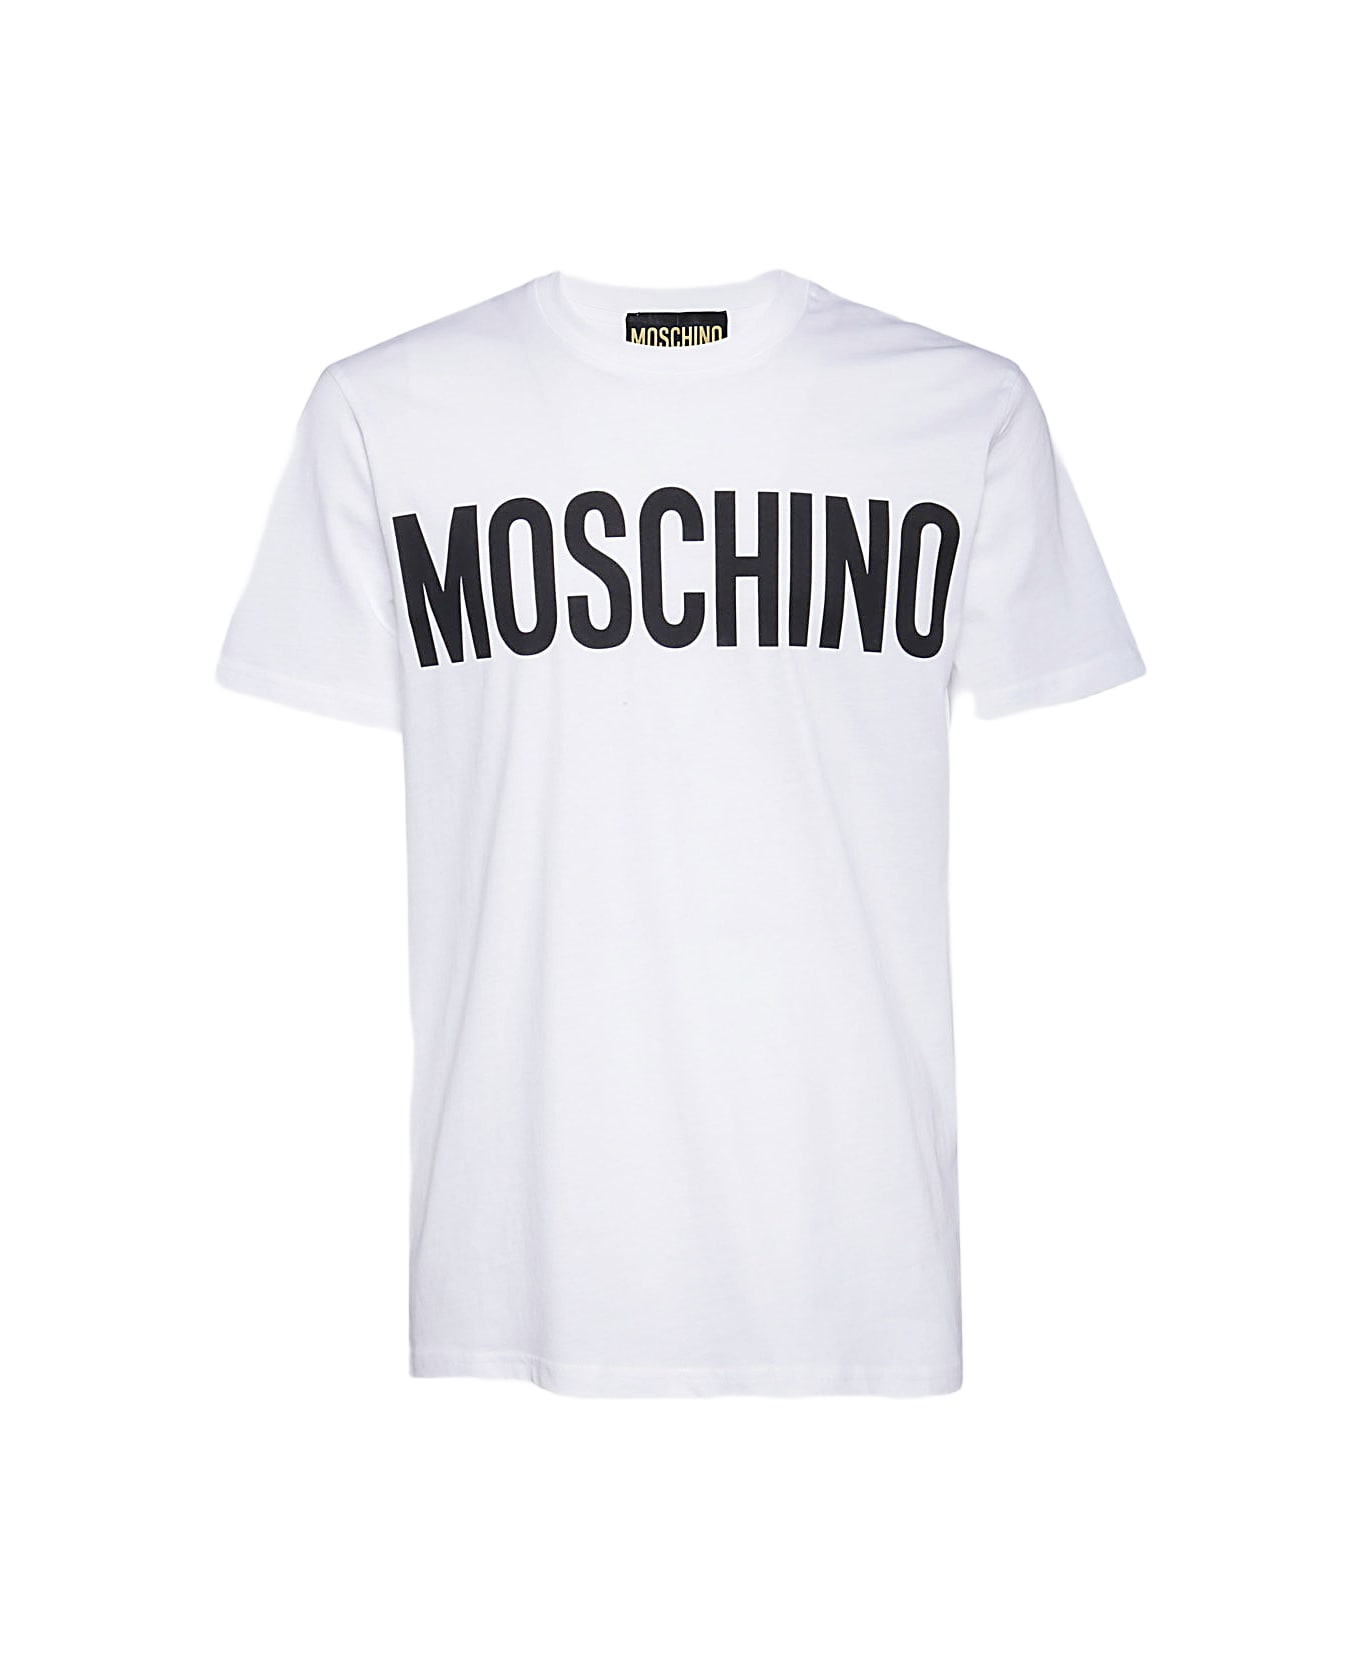 Moschino White Cotton T-shirt - White シャツ